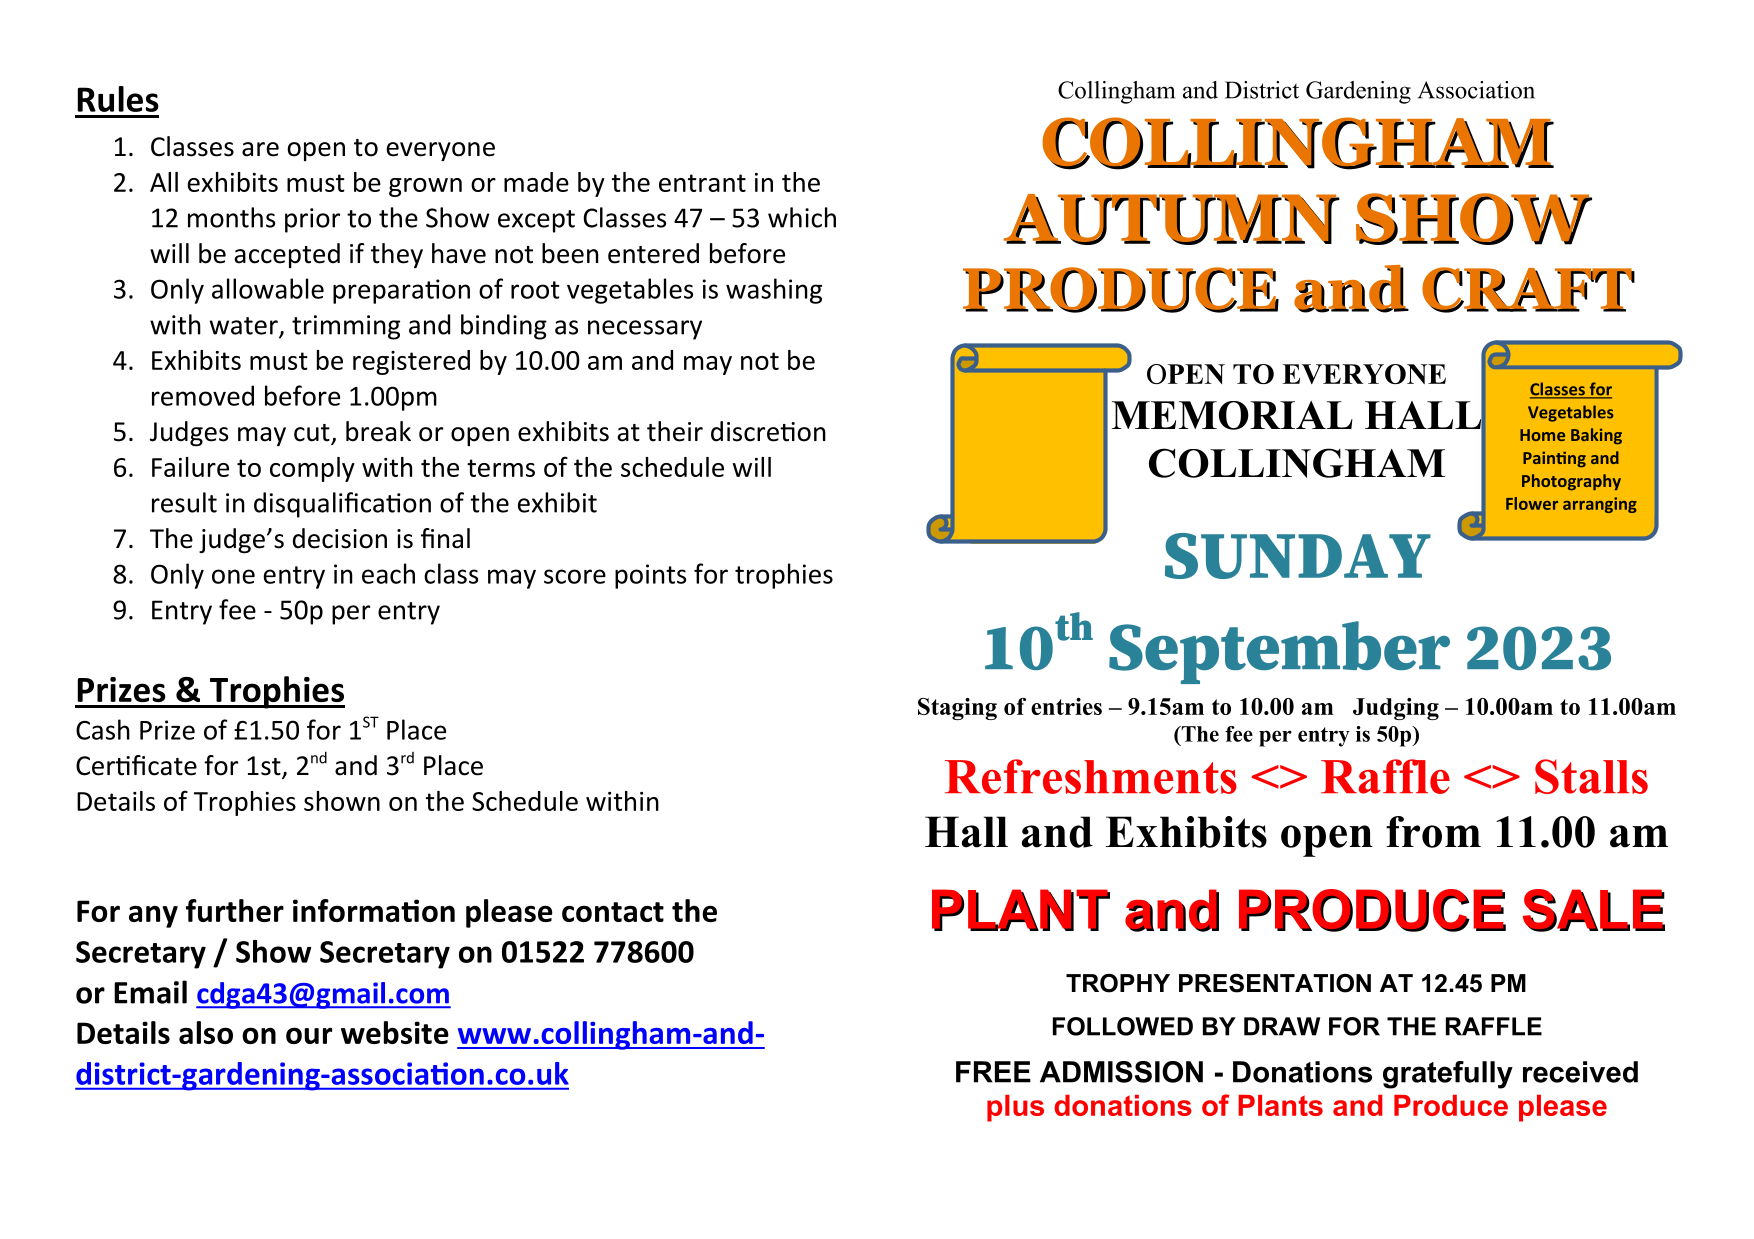 Collingham and District Gardening Association 2023 AUTUMN SHOW